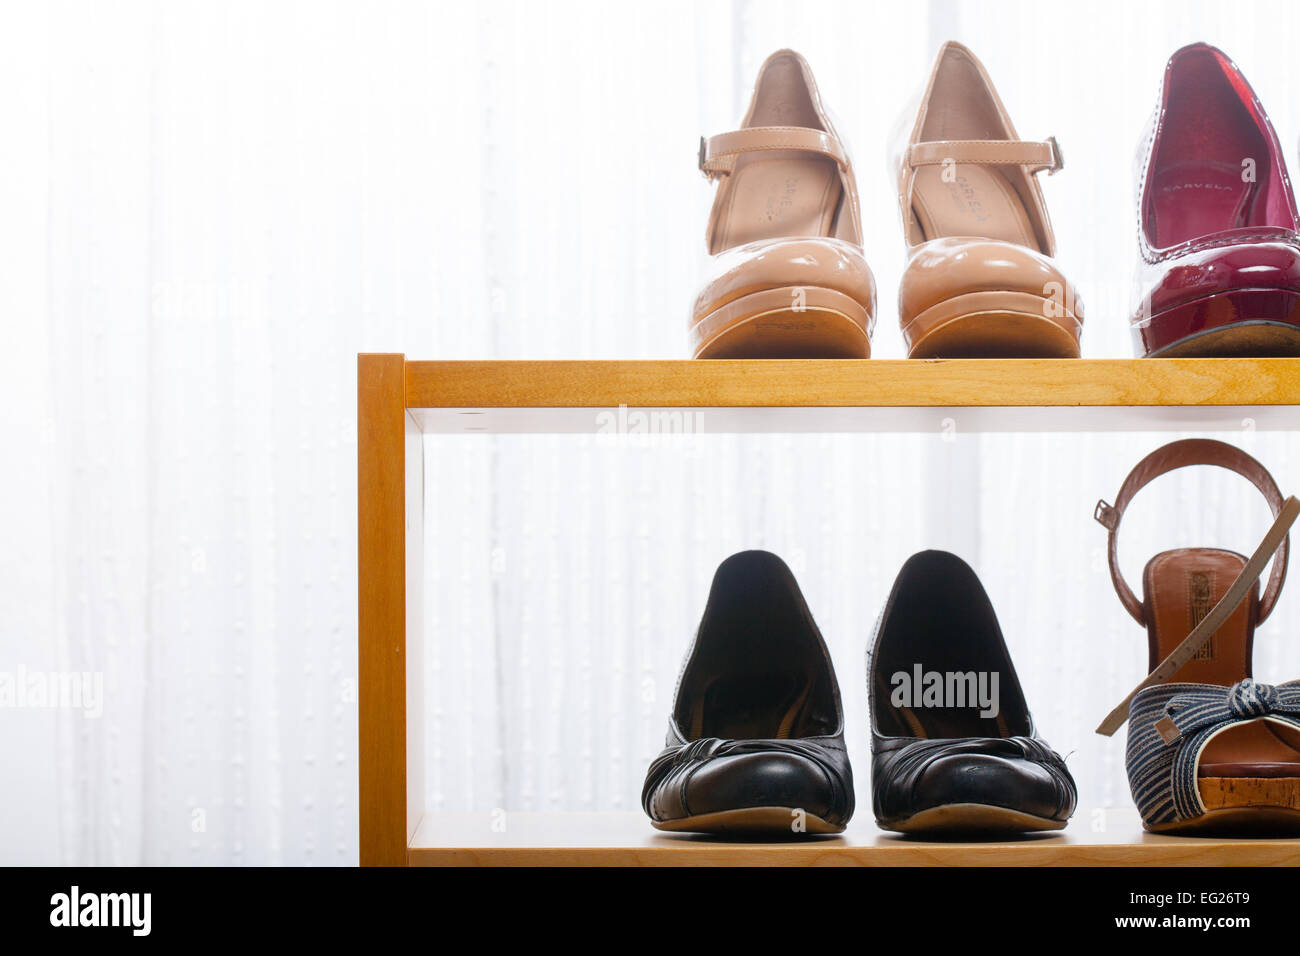 Estante para zapatos fotografías e imágenes de alta resolución - Alamy